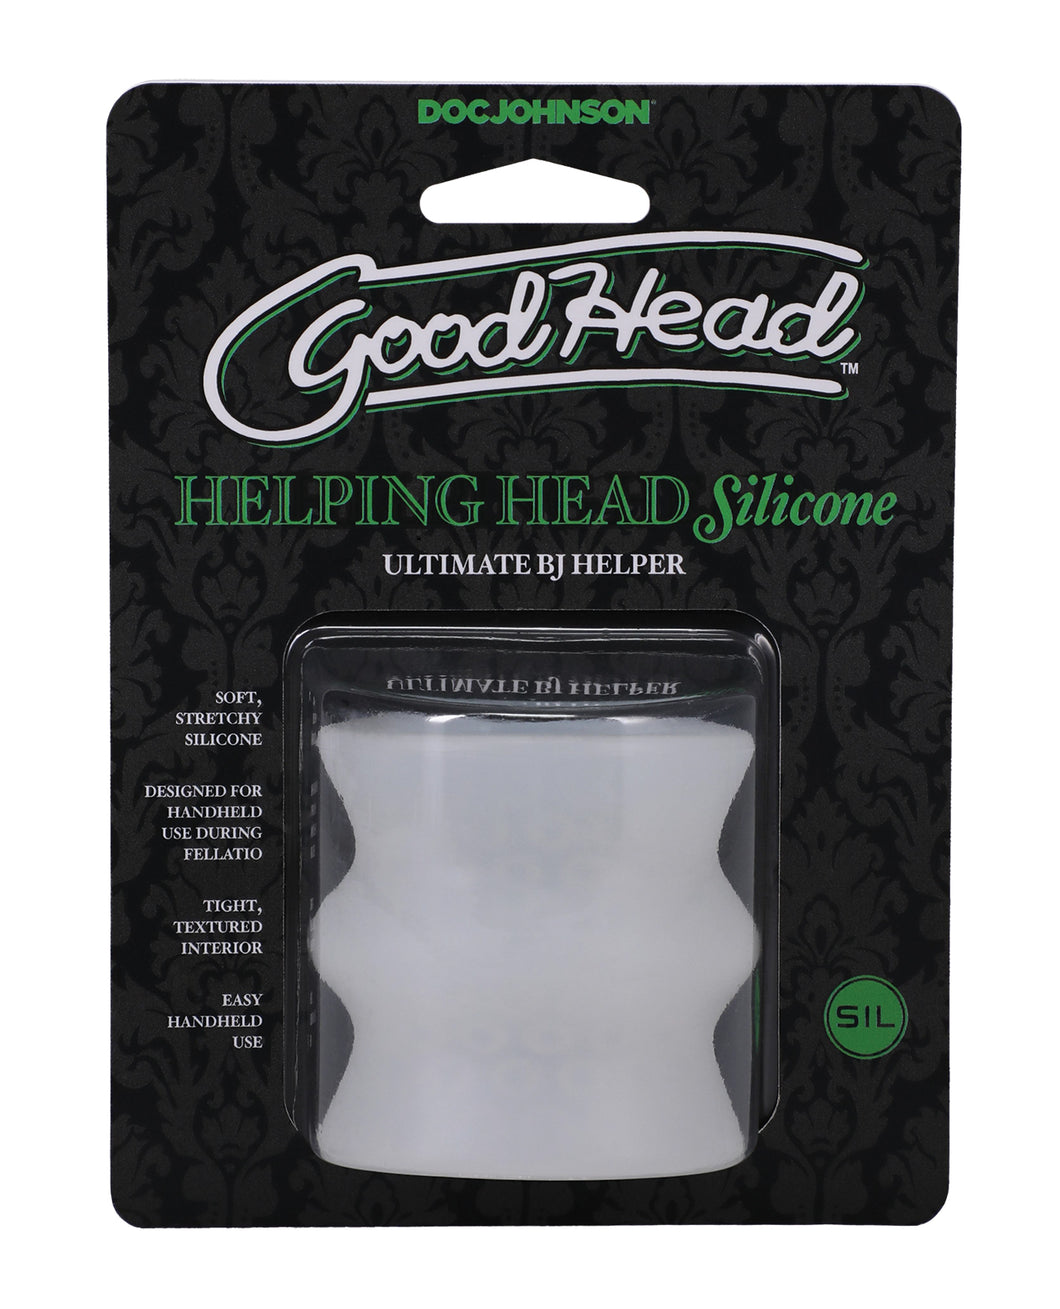 Good Head Helping Head Silicone